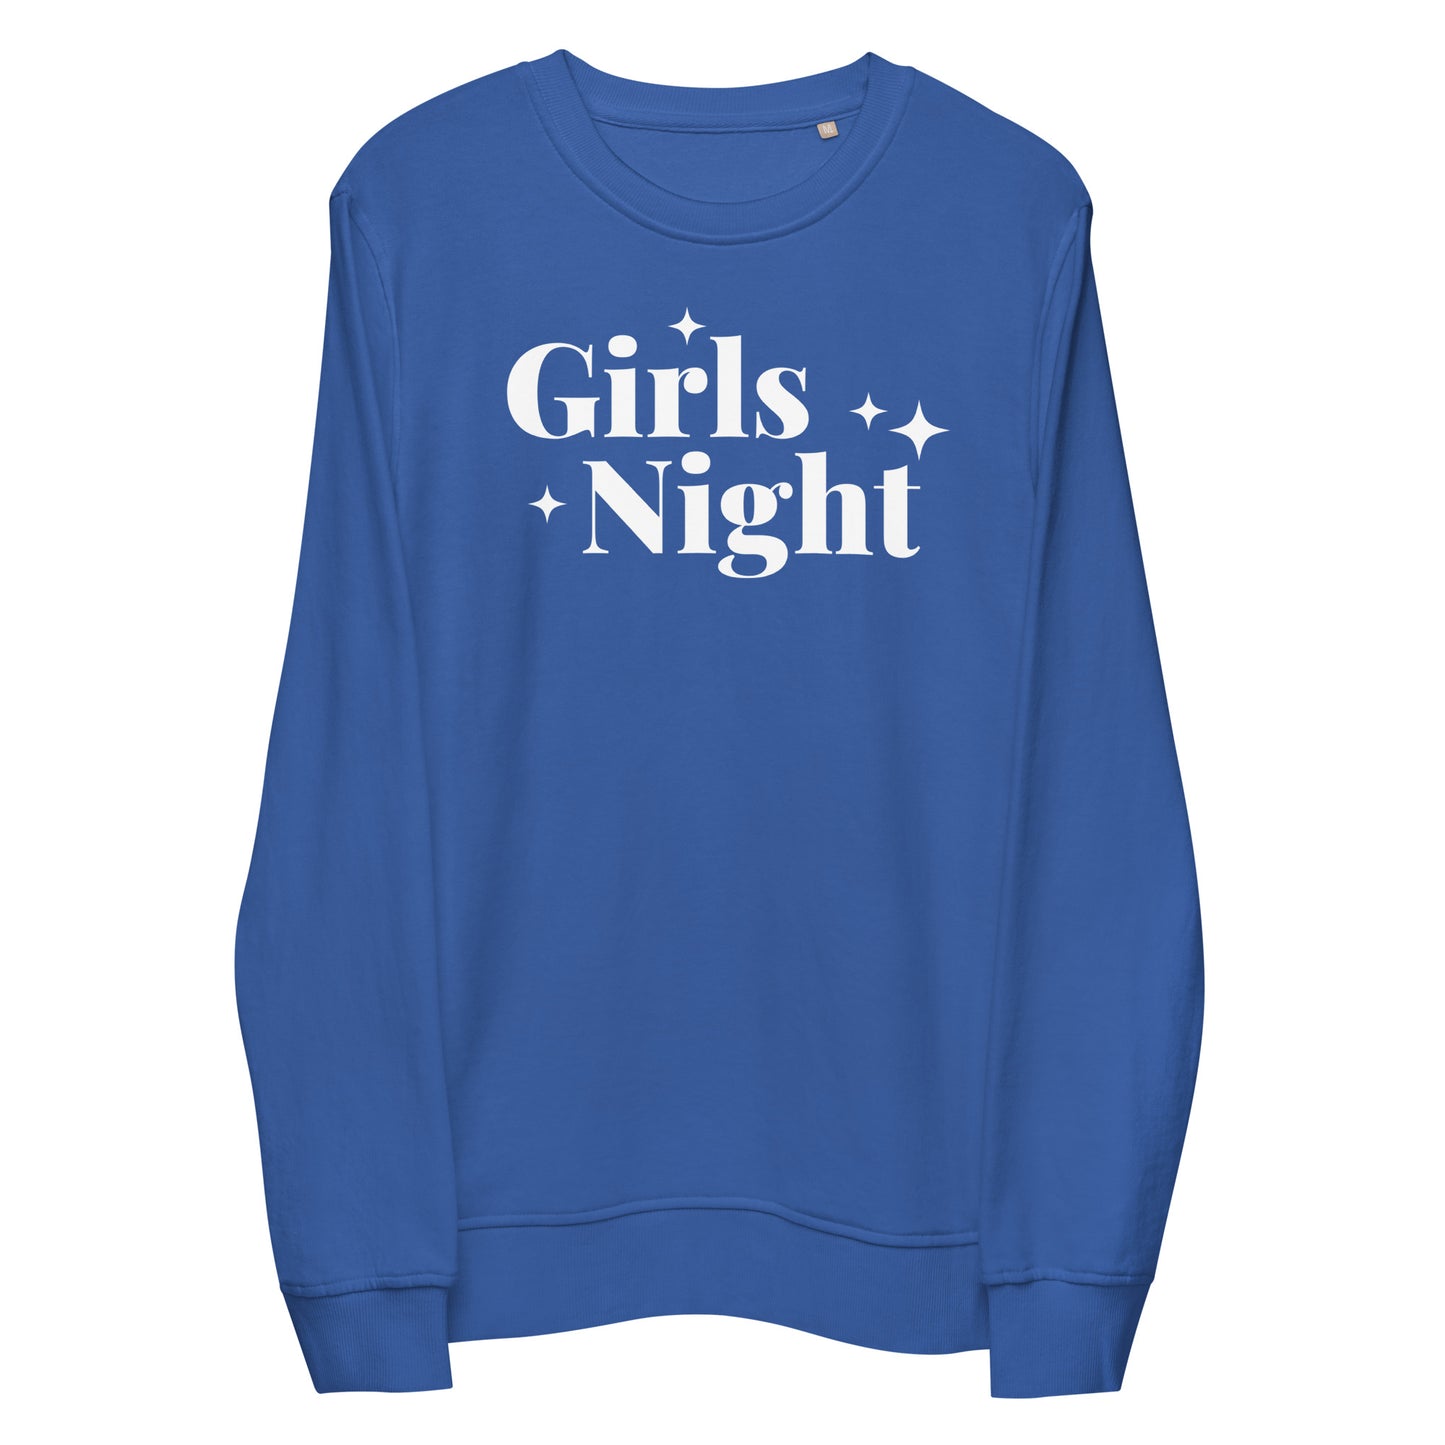 Summer Girls Night Sweatshirt in color blue